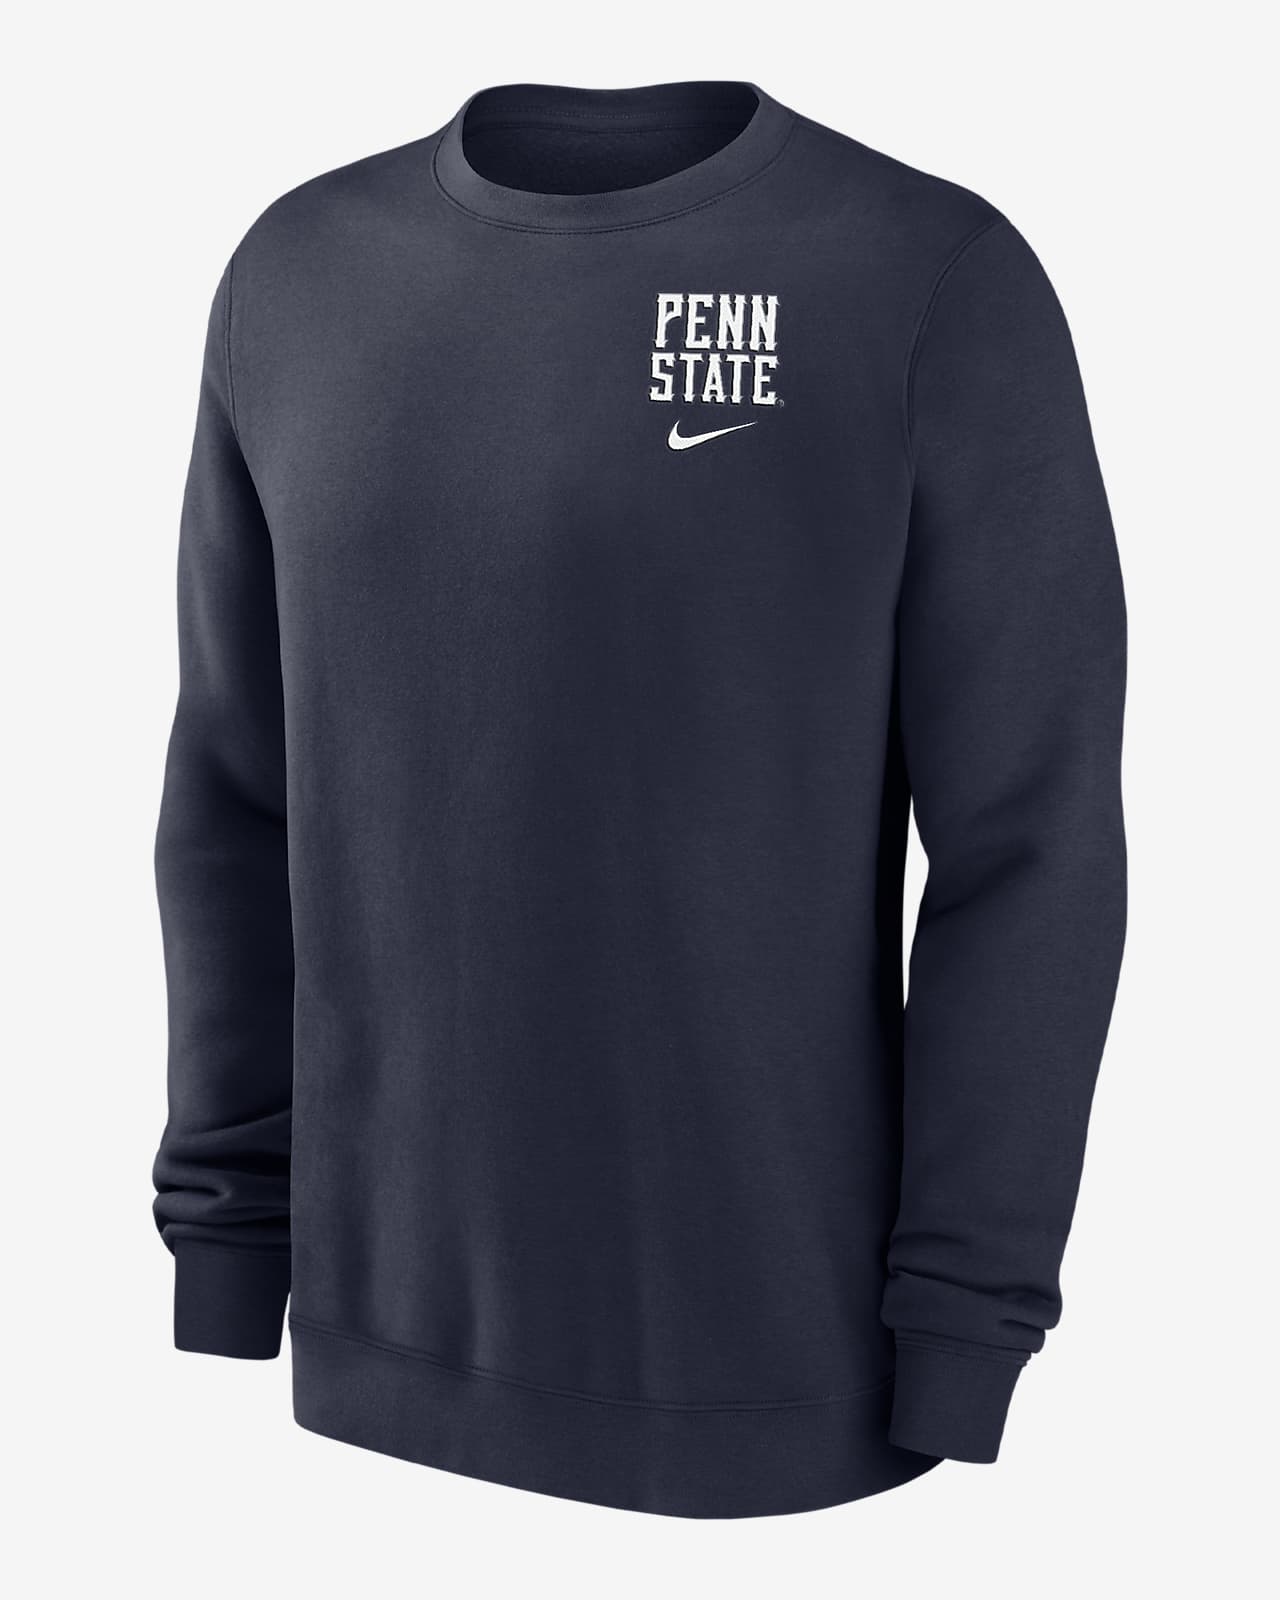 Penn State Club Fleece Men's Nike College Sweatshirt